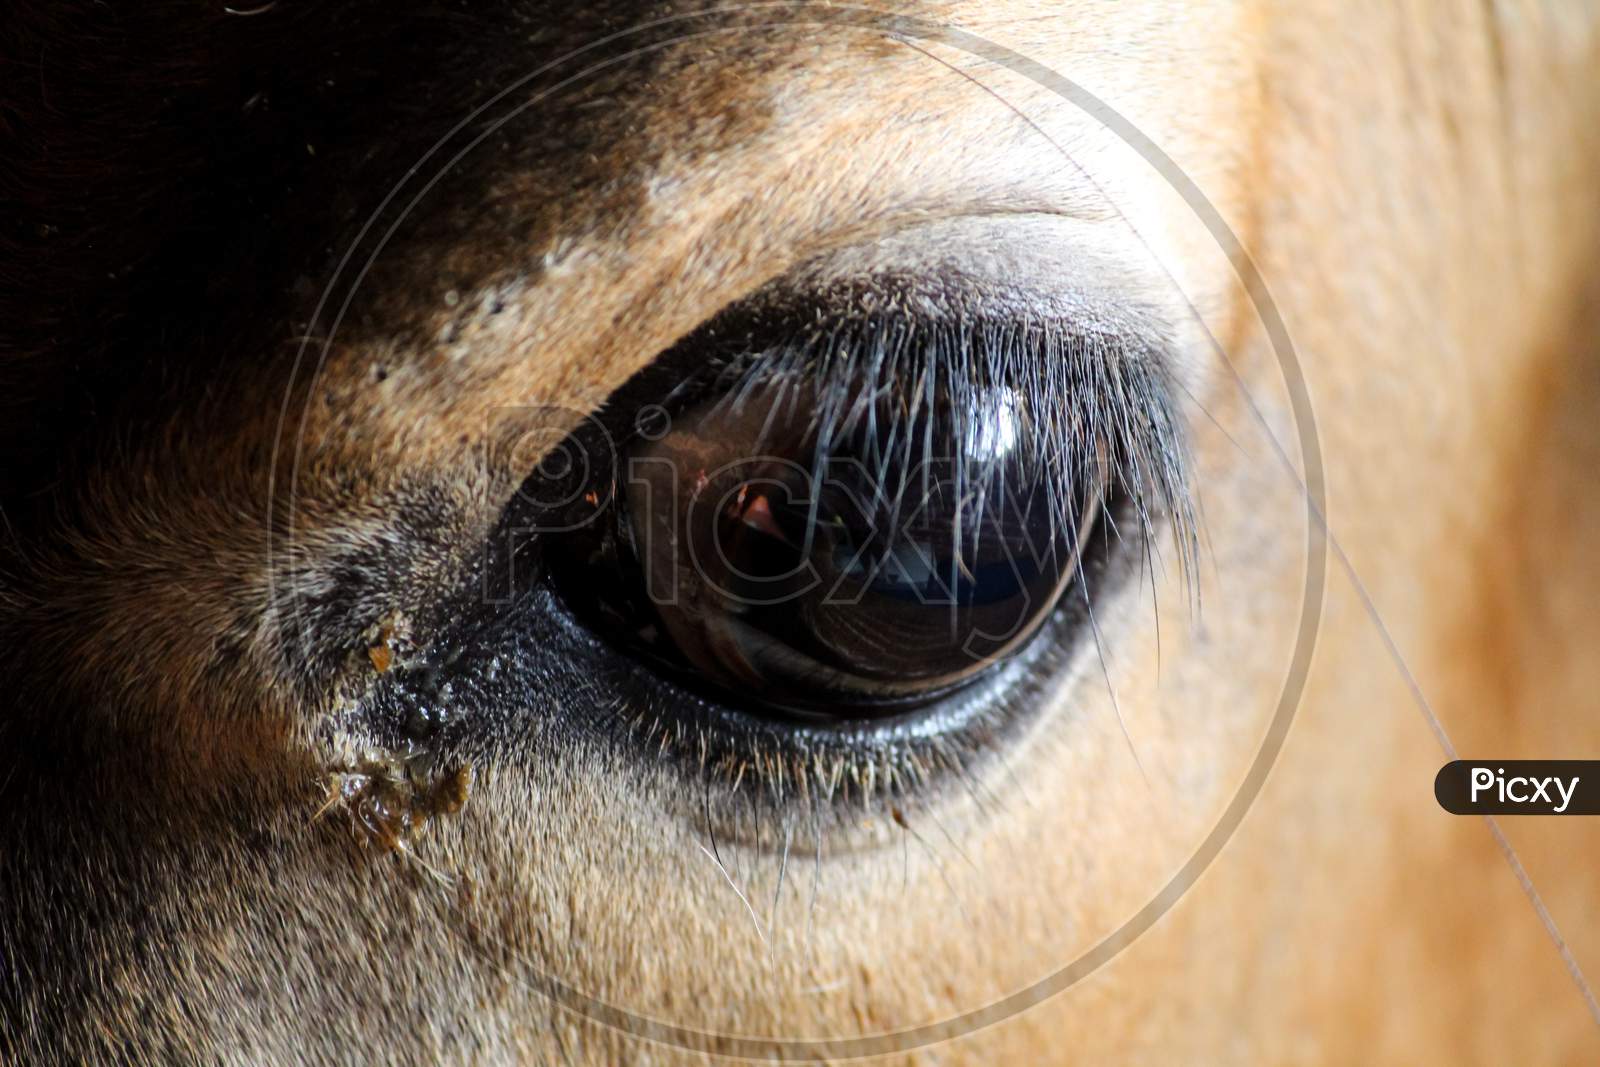 Cow eye closeup